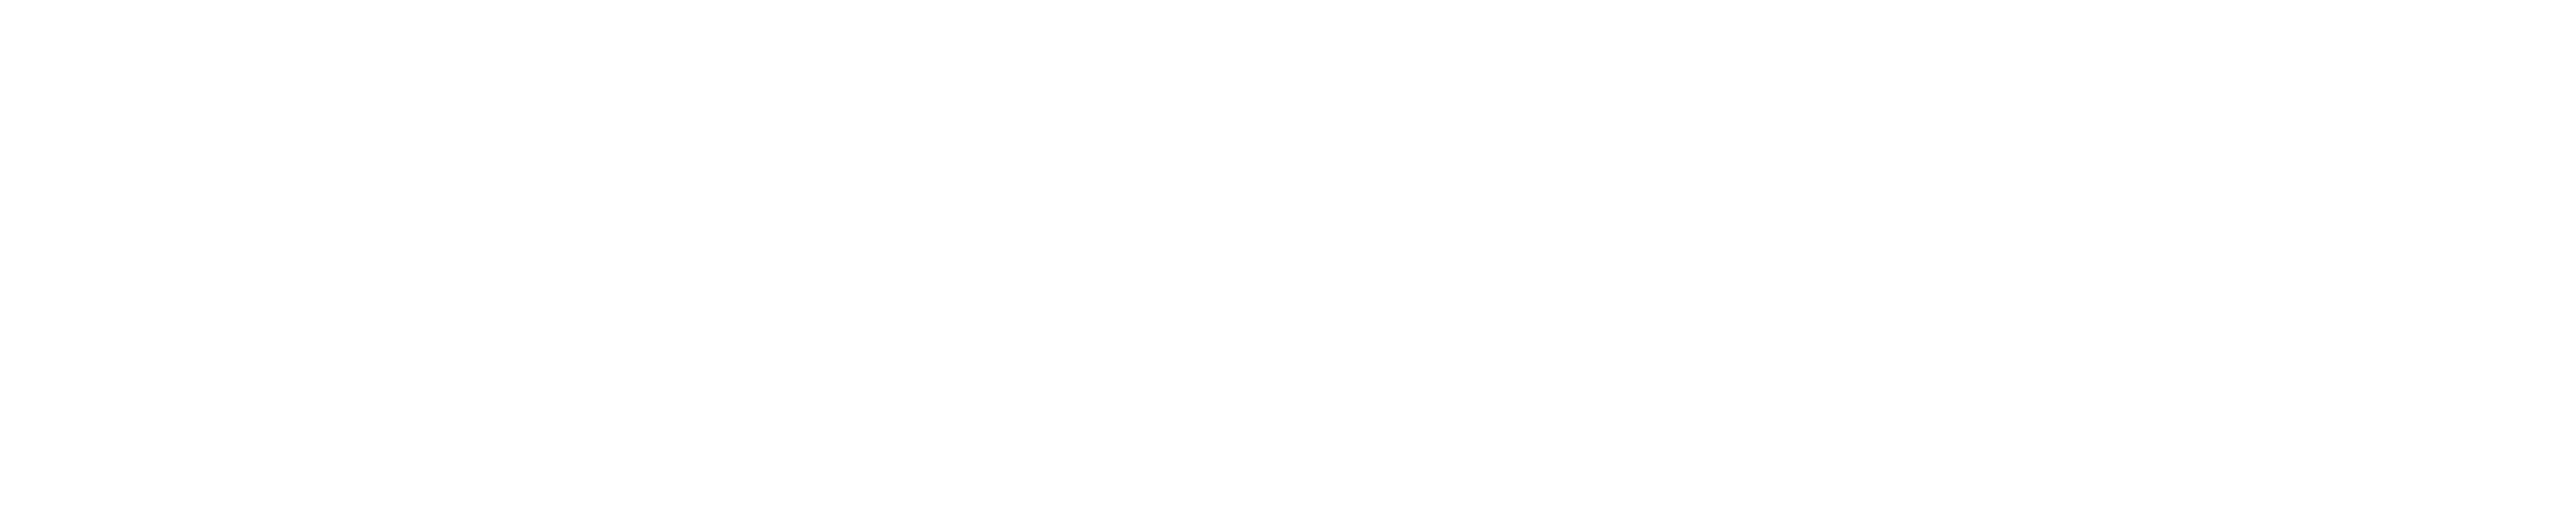 Deathloop-logo